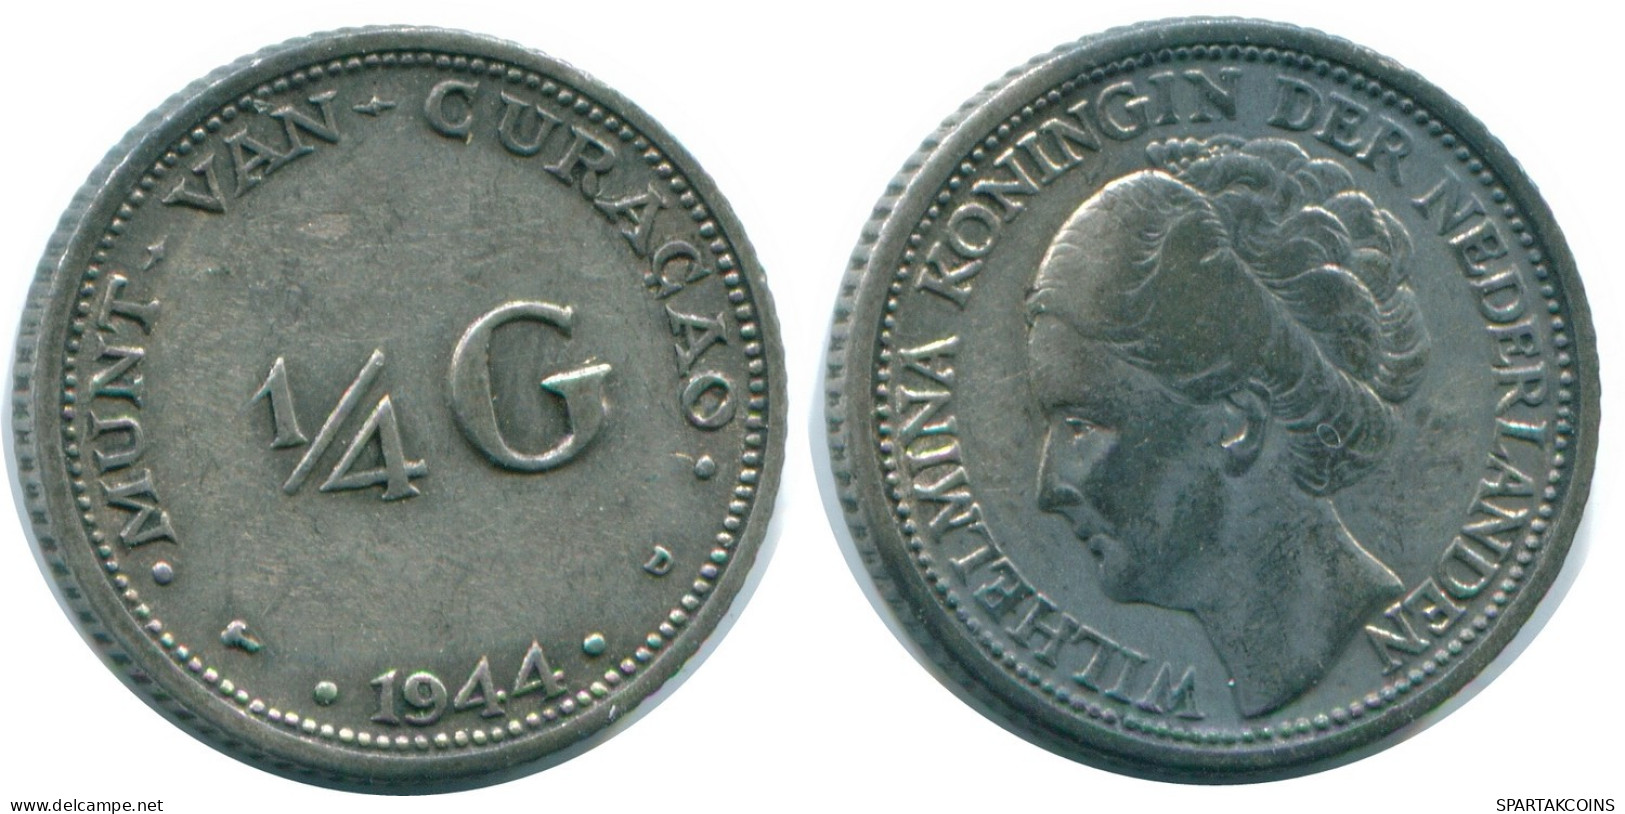 1/4 GULDEN 1944 CURACAO Netherlands SILVER Colonial Coin #NL10694.4.U.A - Curacao